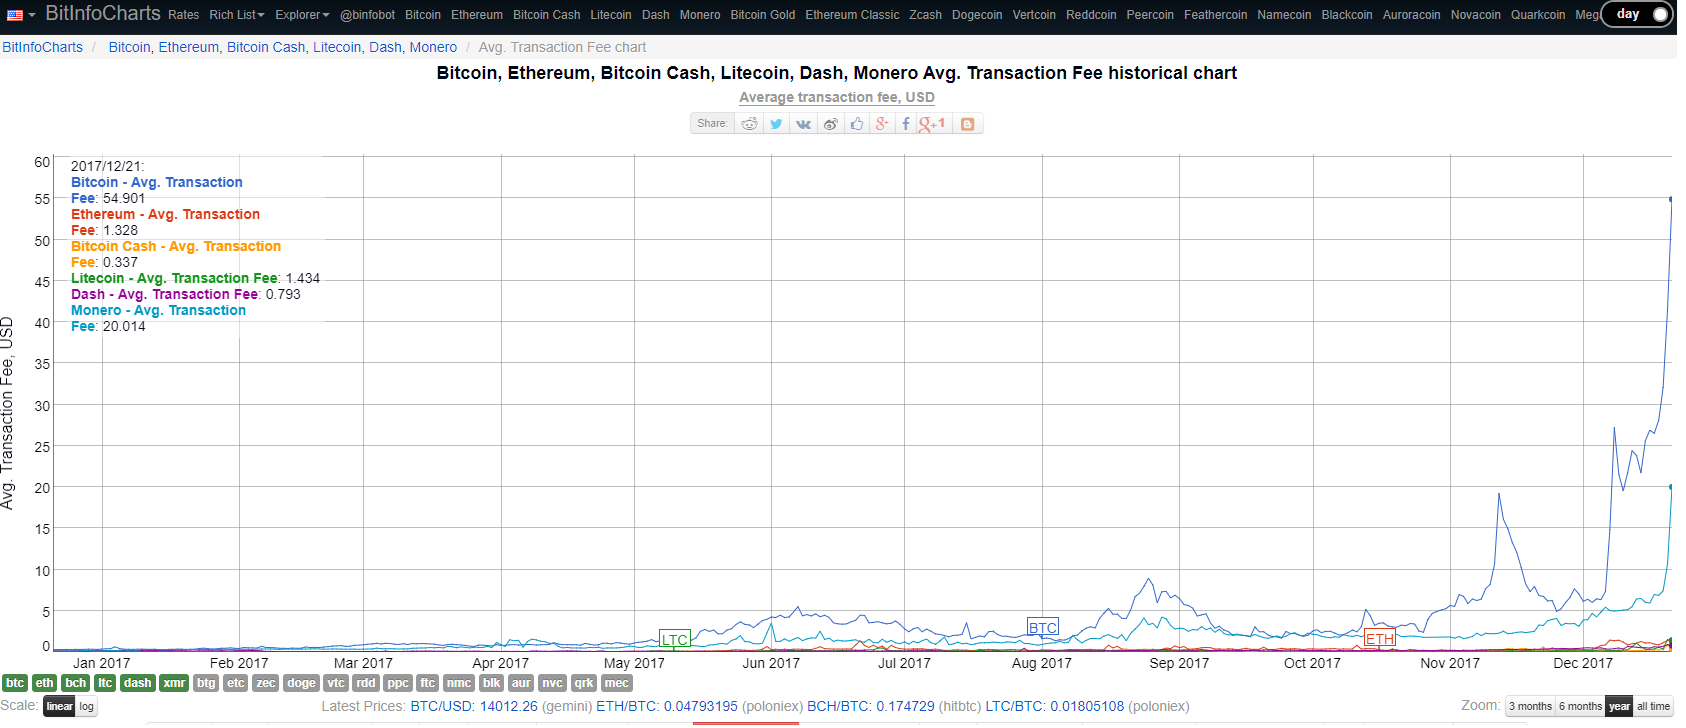 Bitcoin, Litecoin, Dogecoin Price in USD historical chart